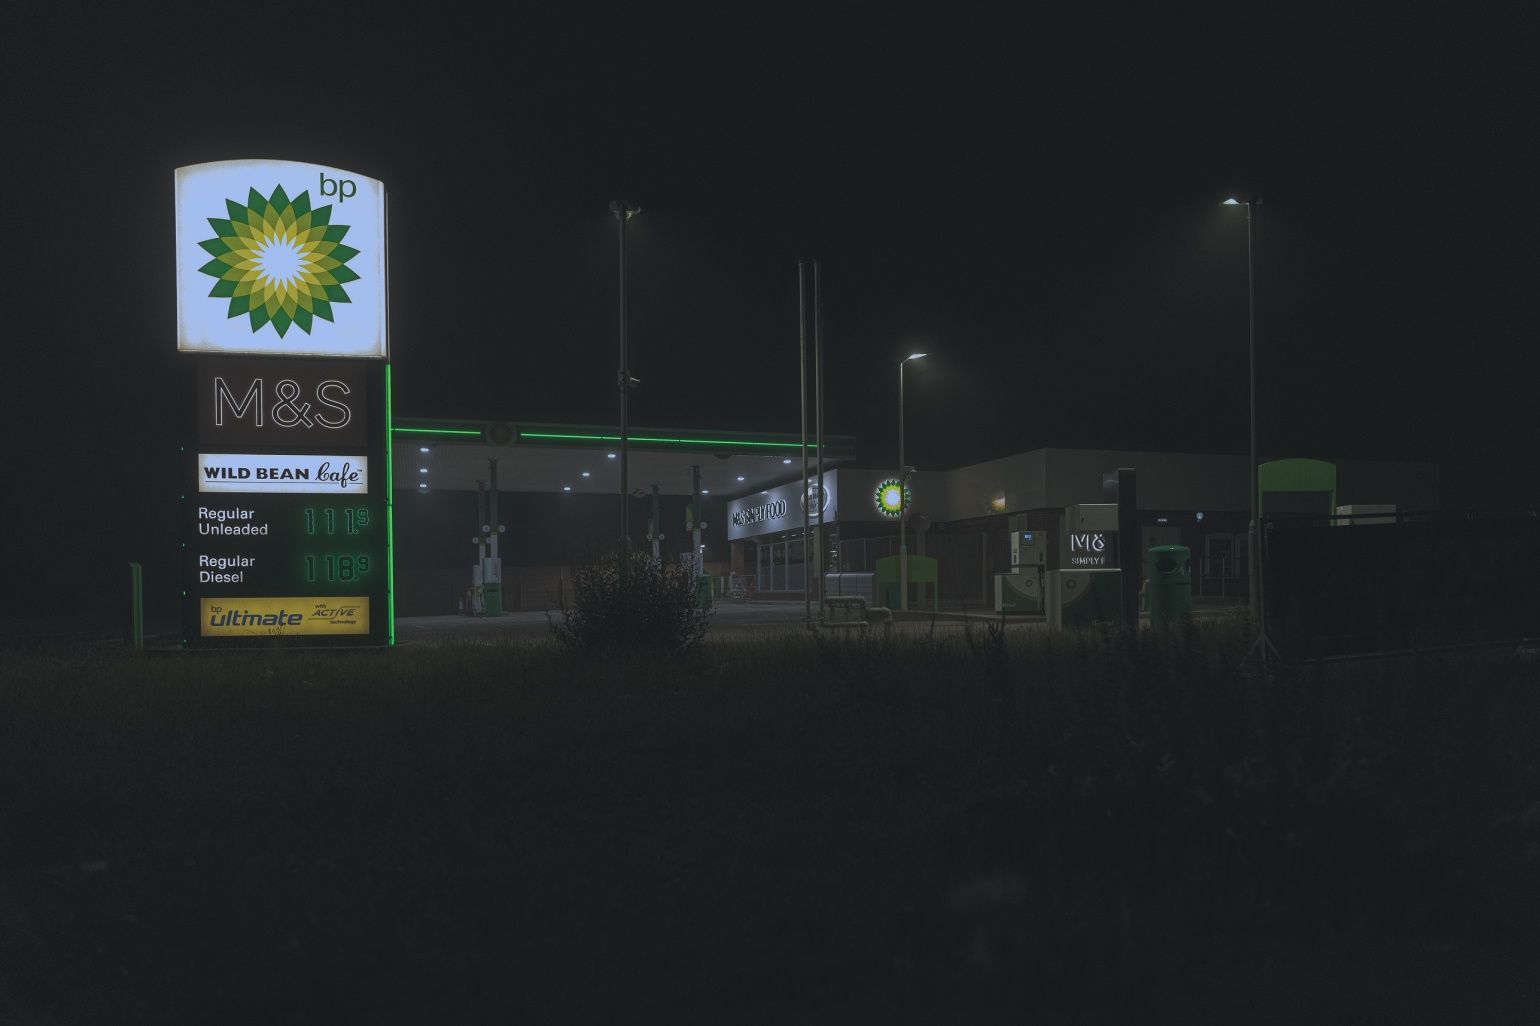 BP продает нефтехимический бизнес за $5 млрд